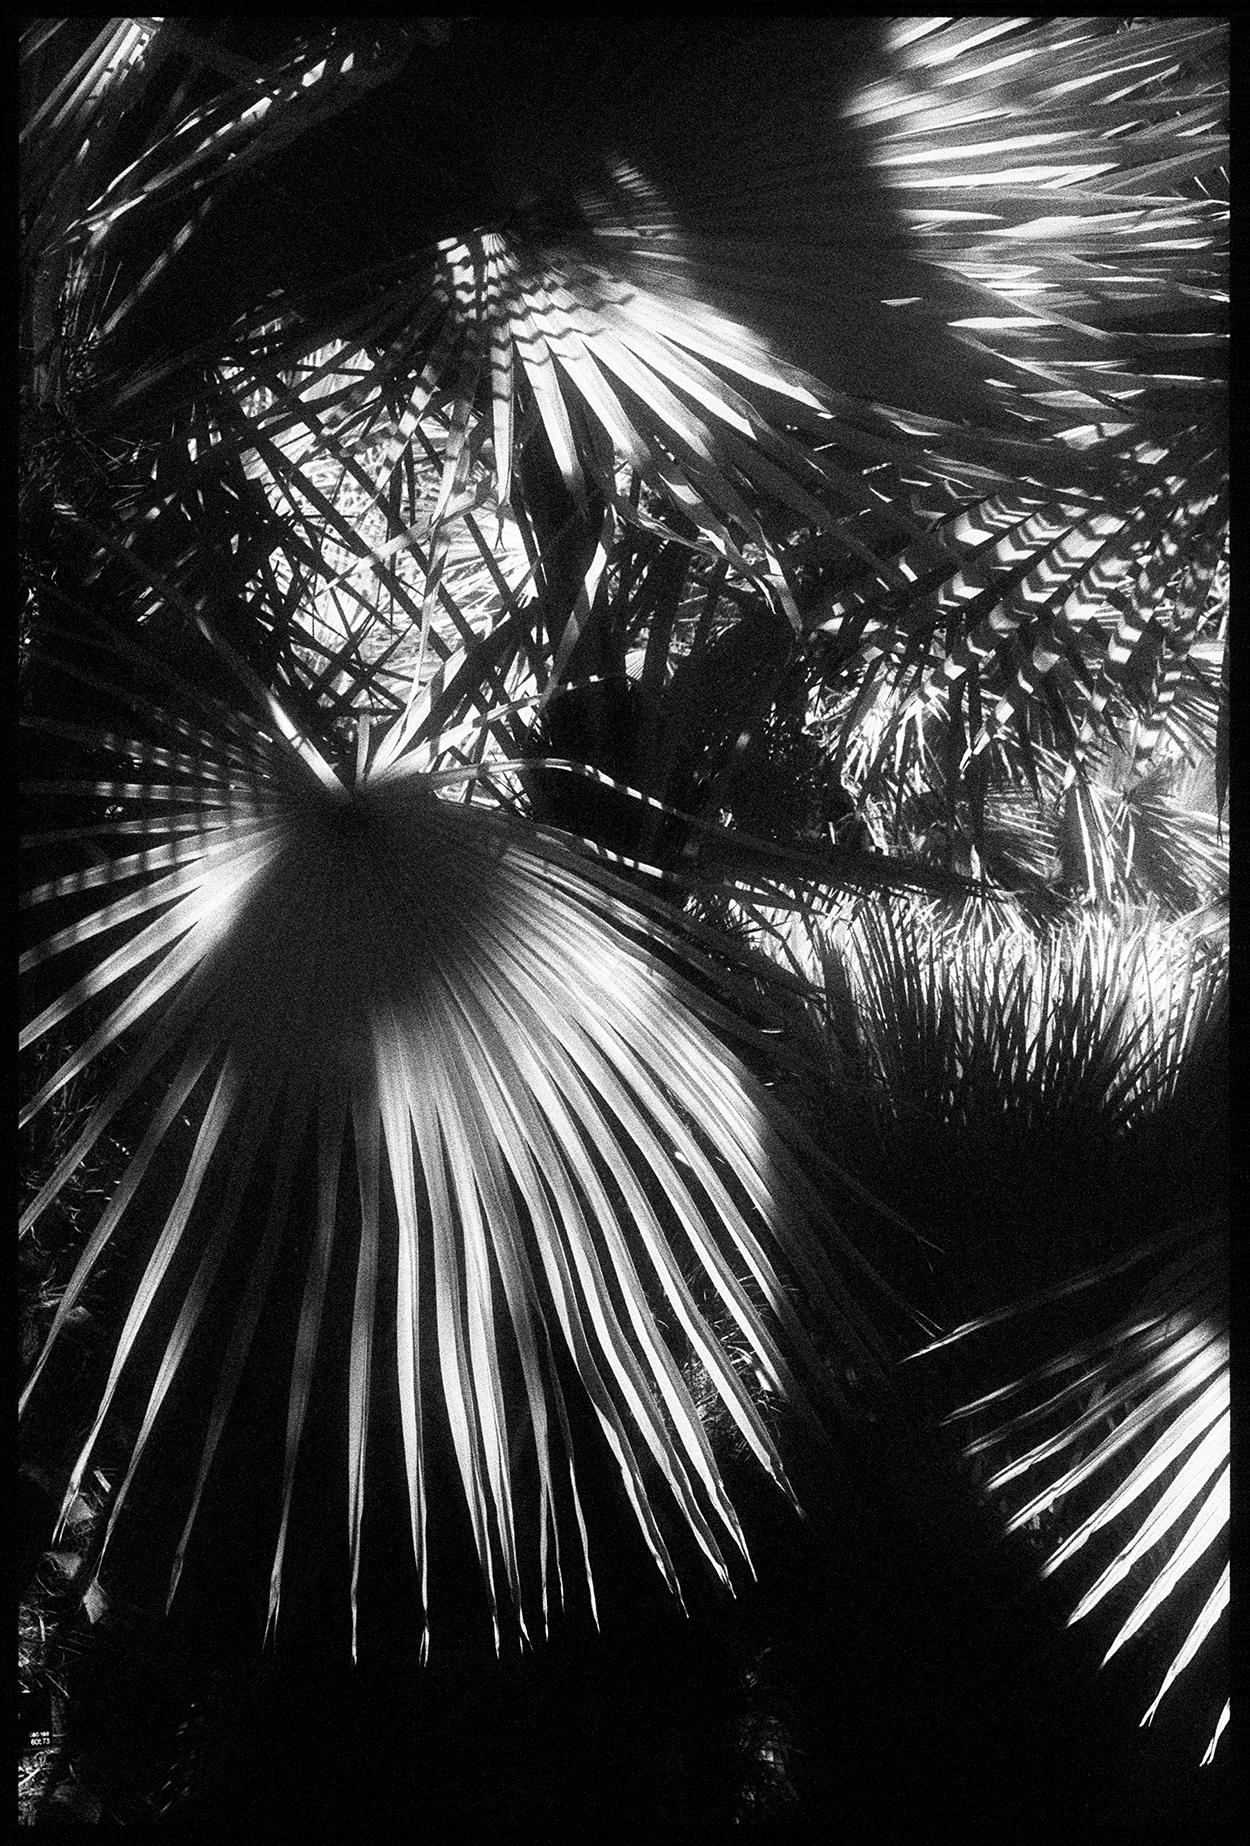 Edward Alfano Black and White Photograph - Huntington Gardens XXV - Black & White Photo of Surreal and Landscape Abstract